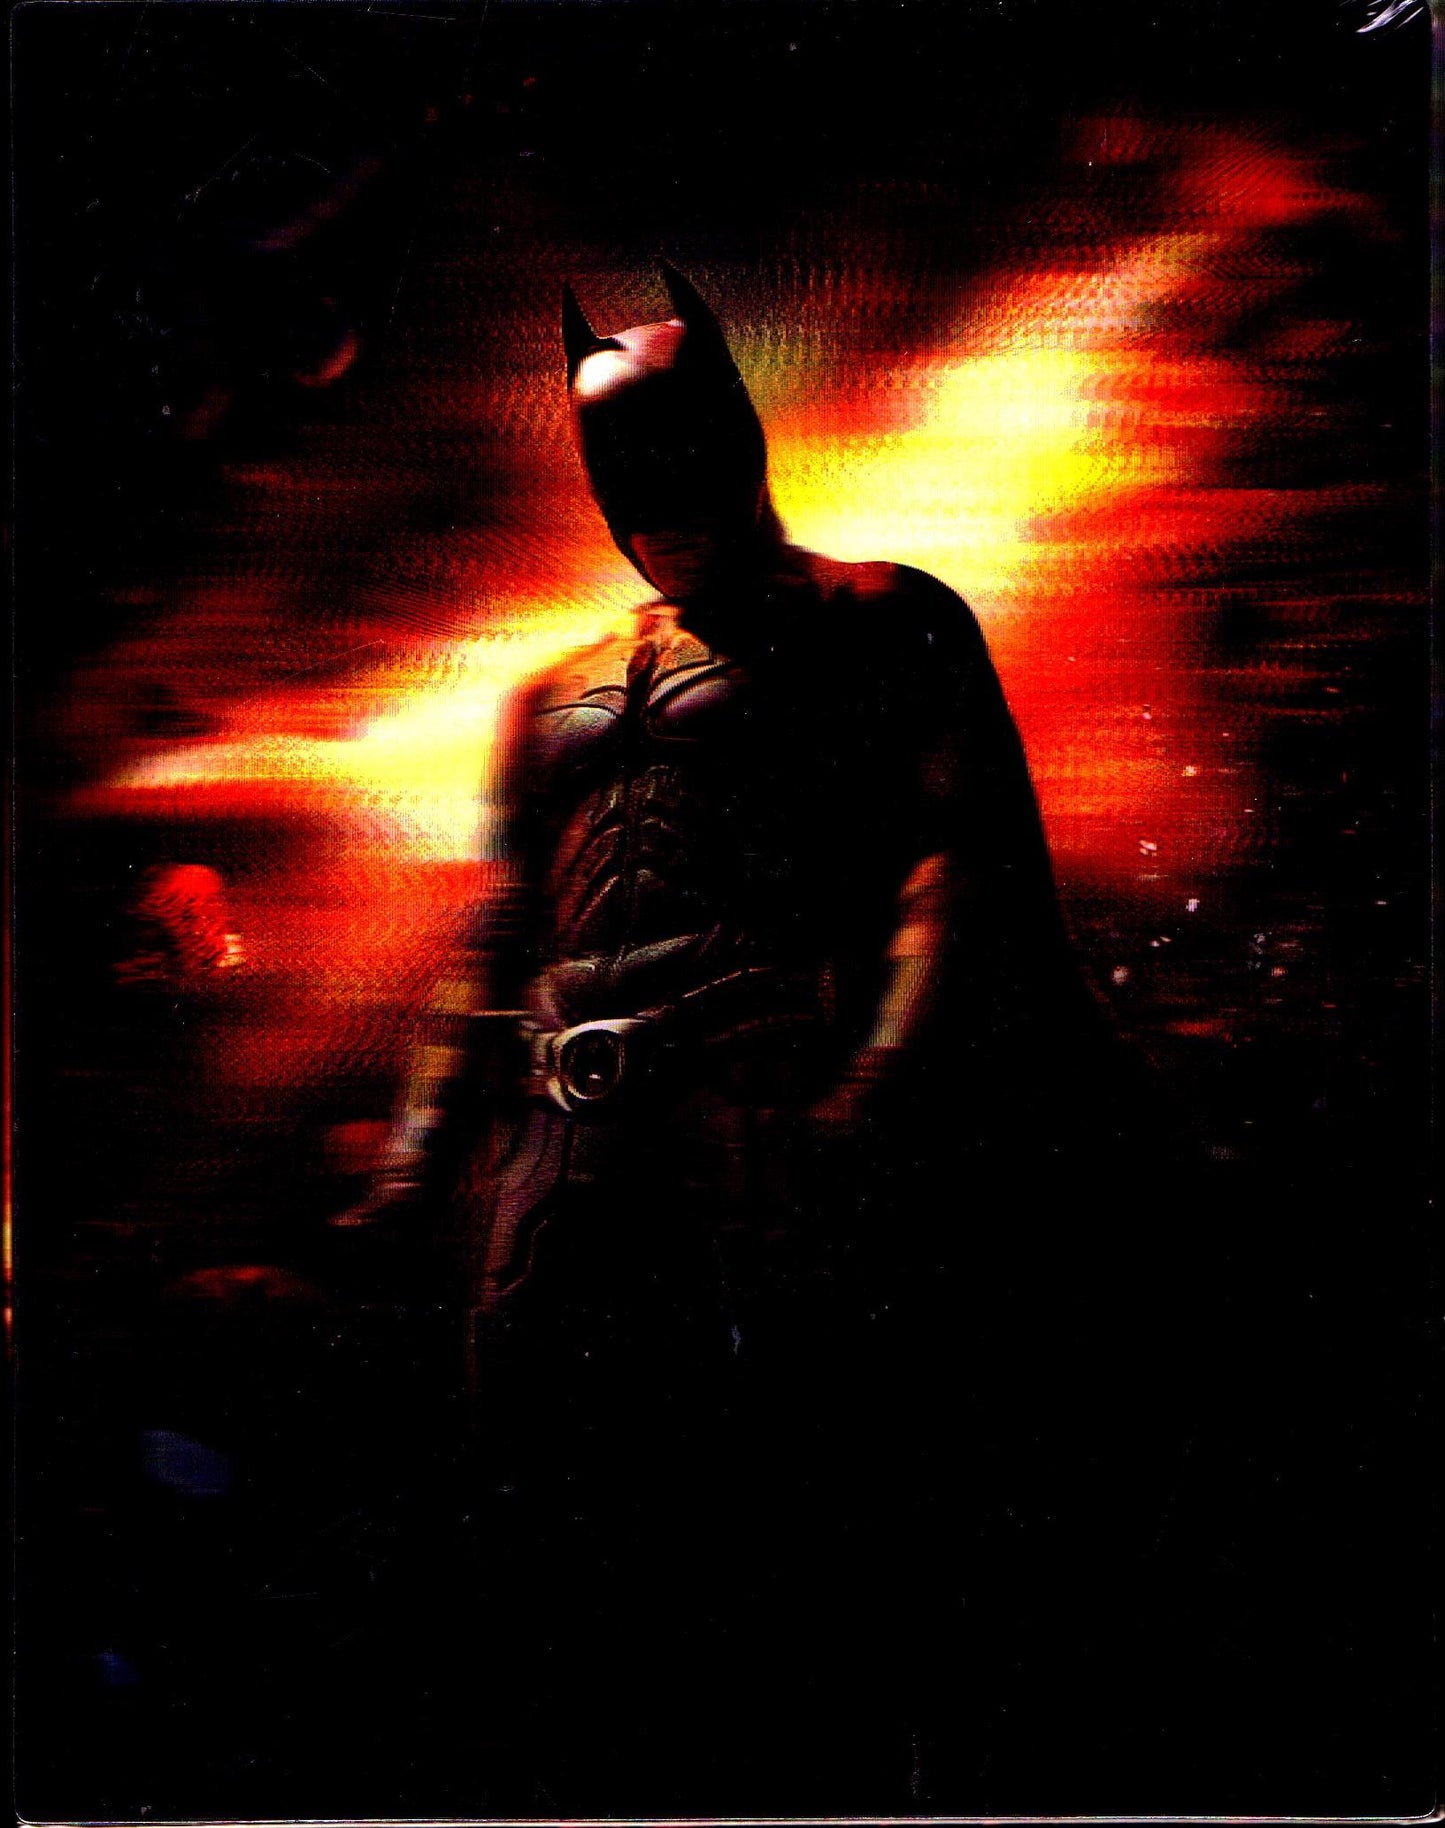 The Dark Knight Rises 4K 1-Click SteelBook (Blufans #62)(China)